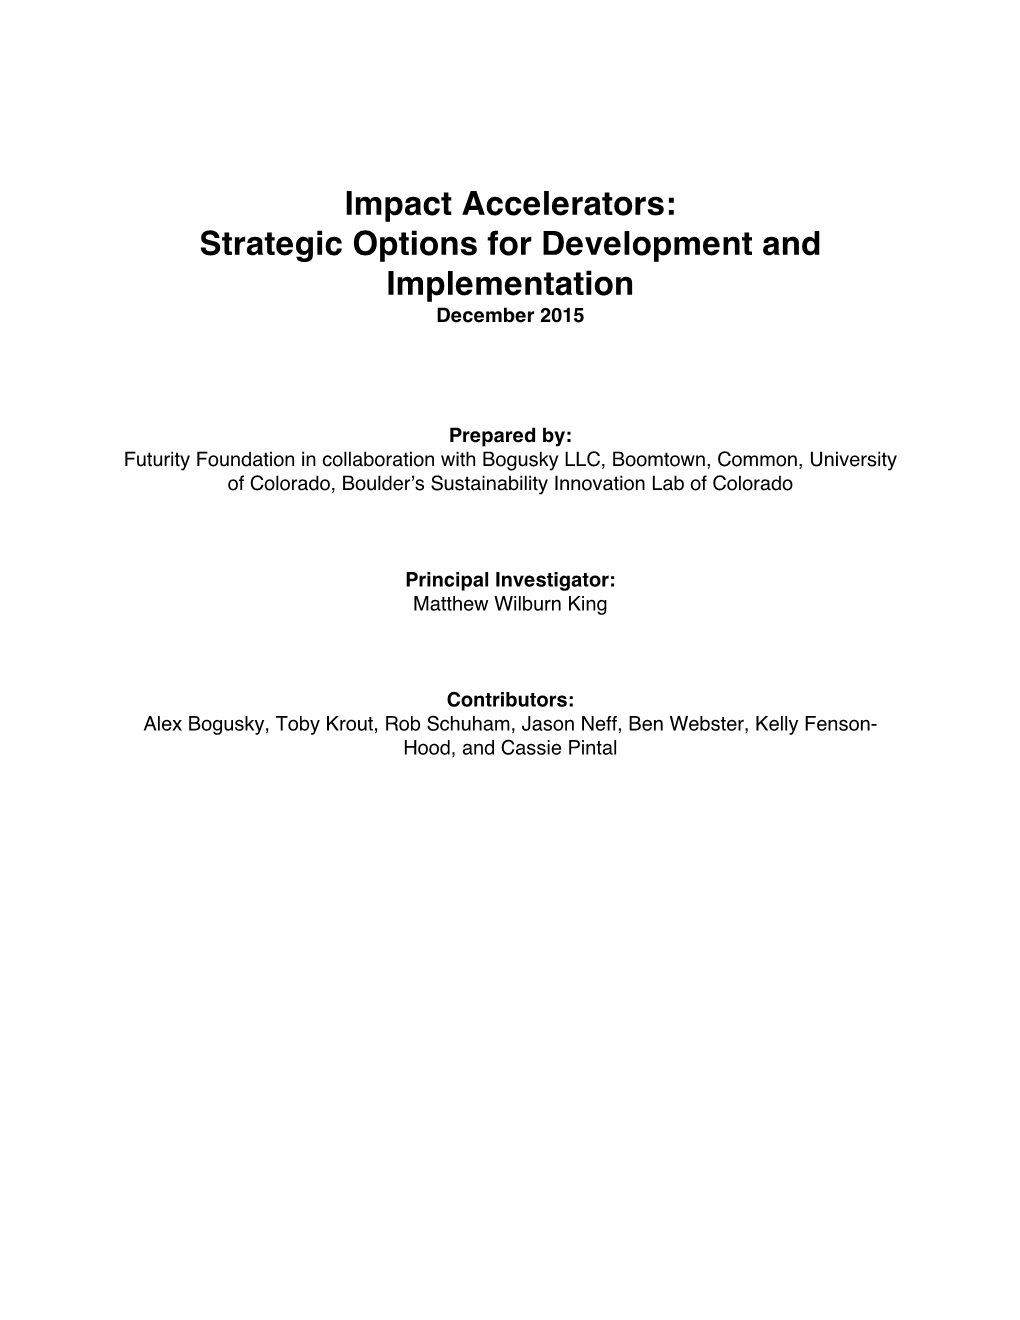 Impact Accelerators: Strategic Options for Development and Implementation December 2015